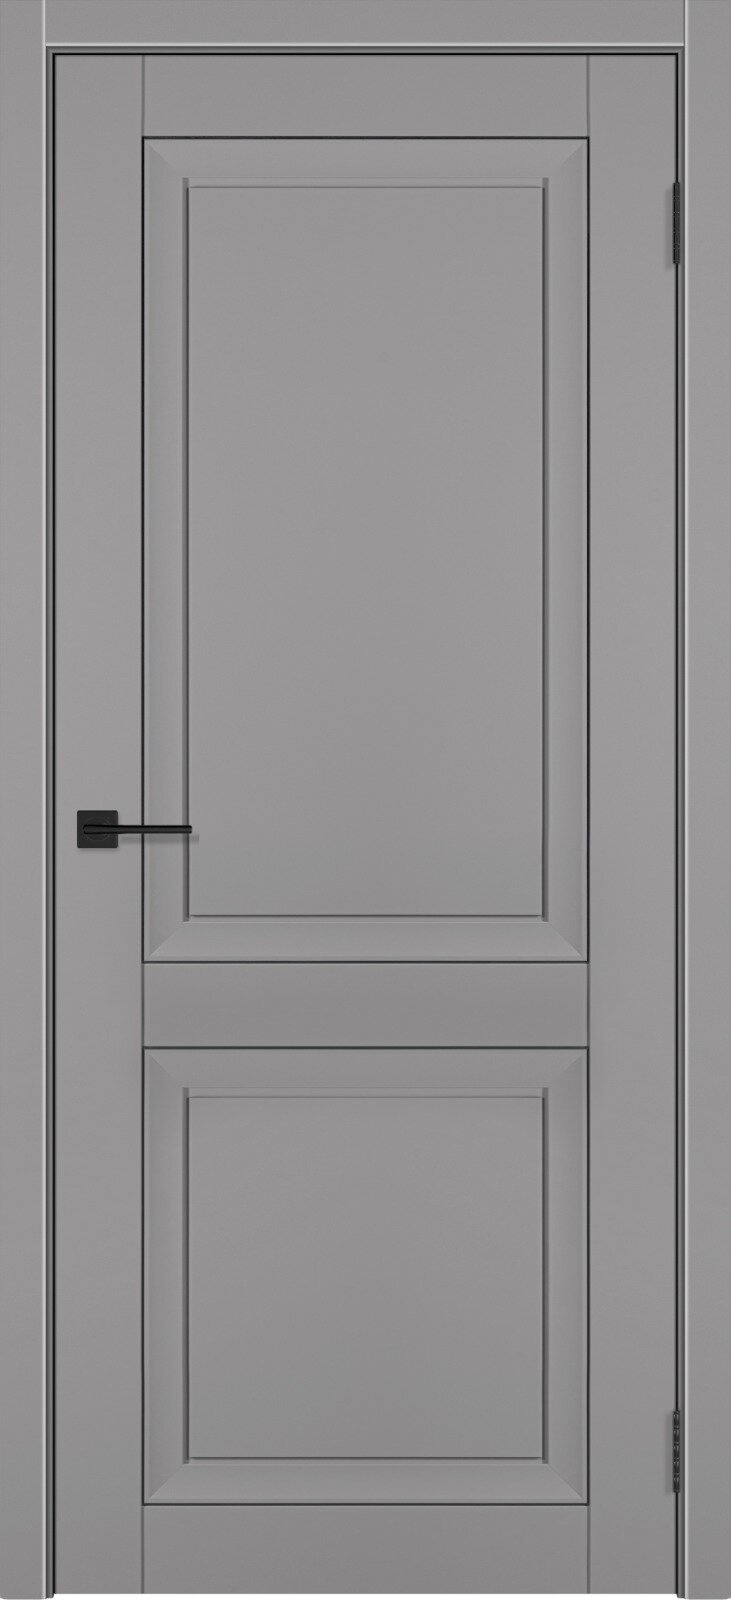 Межкомнатная дверь ДГ "Деканто", Soft touch покрытие Серый бархат, толщина 36мм, 800*2000*36мм.